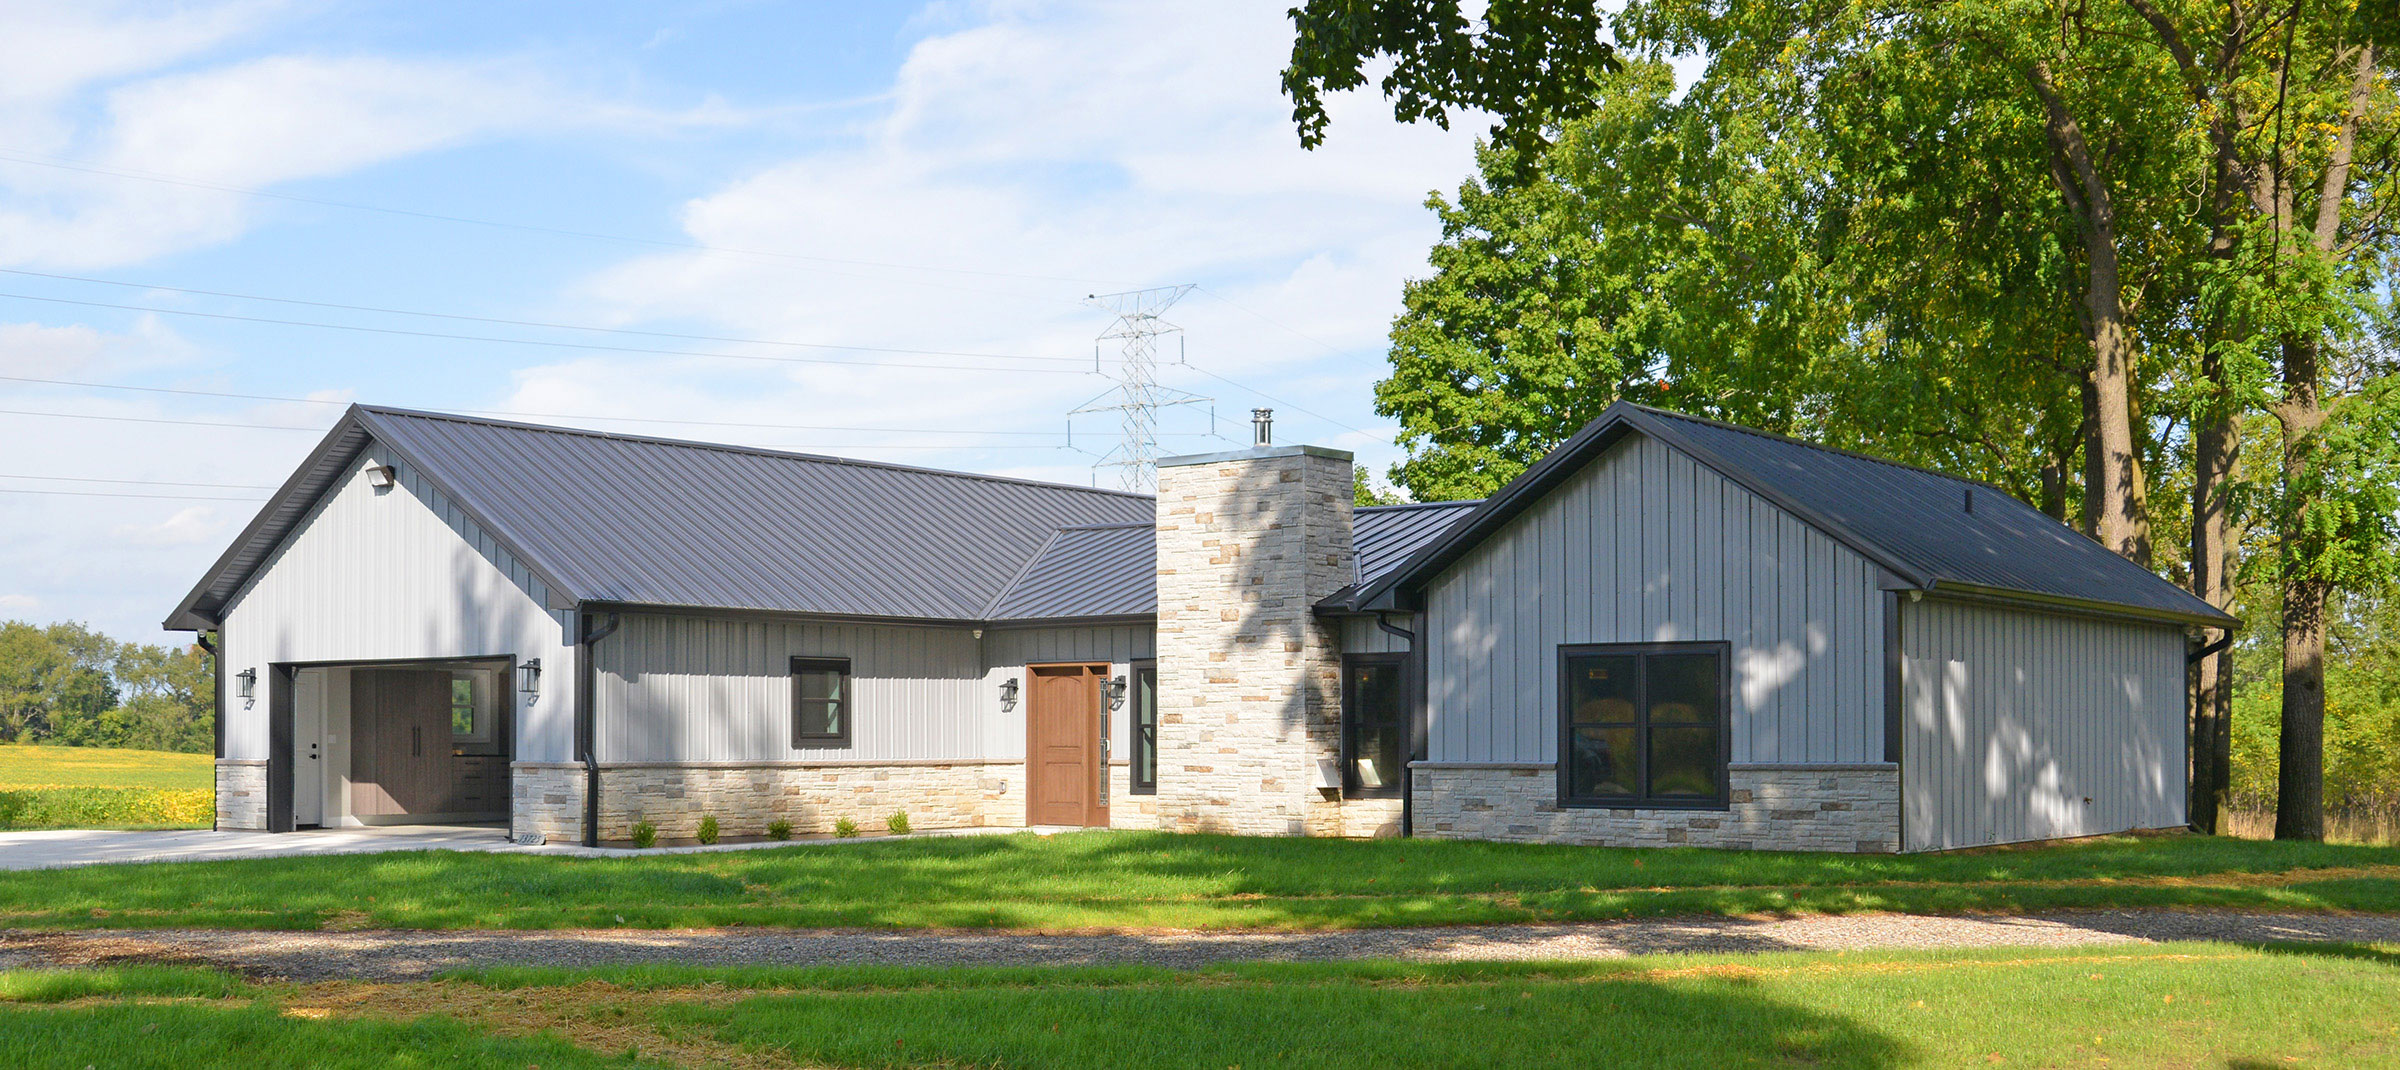 Pole Barn Homes, Shouses, and Bandominiums